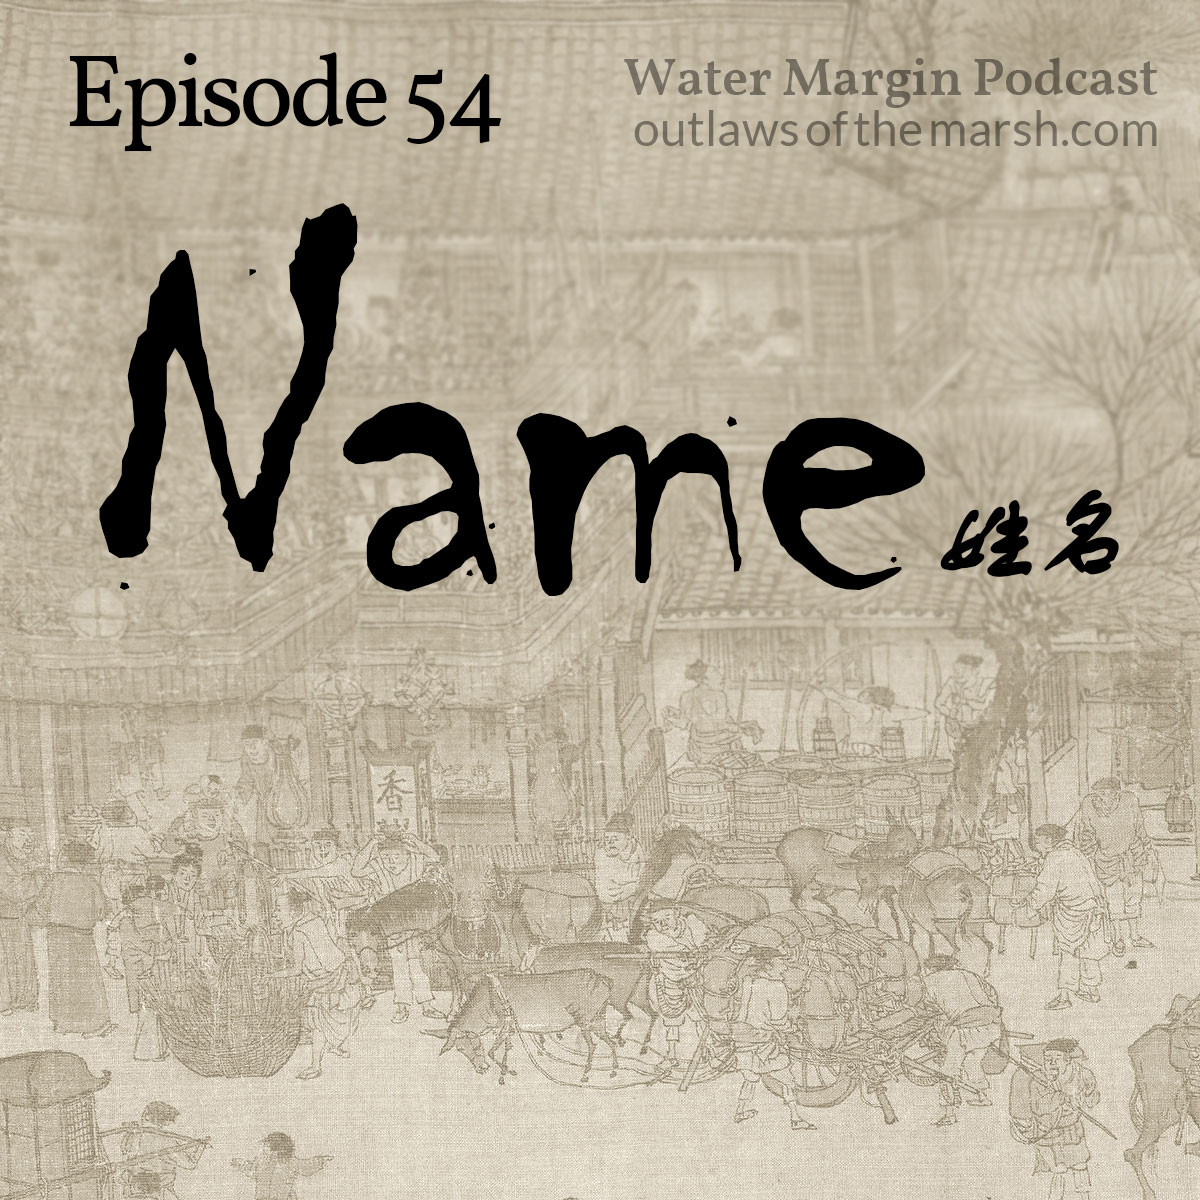 Water Margin Podcast: Episode 054